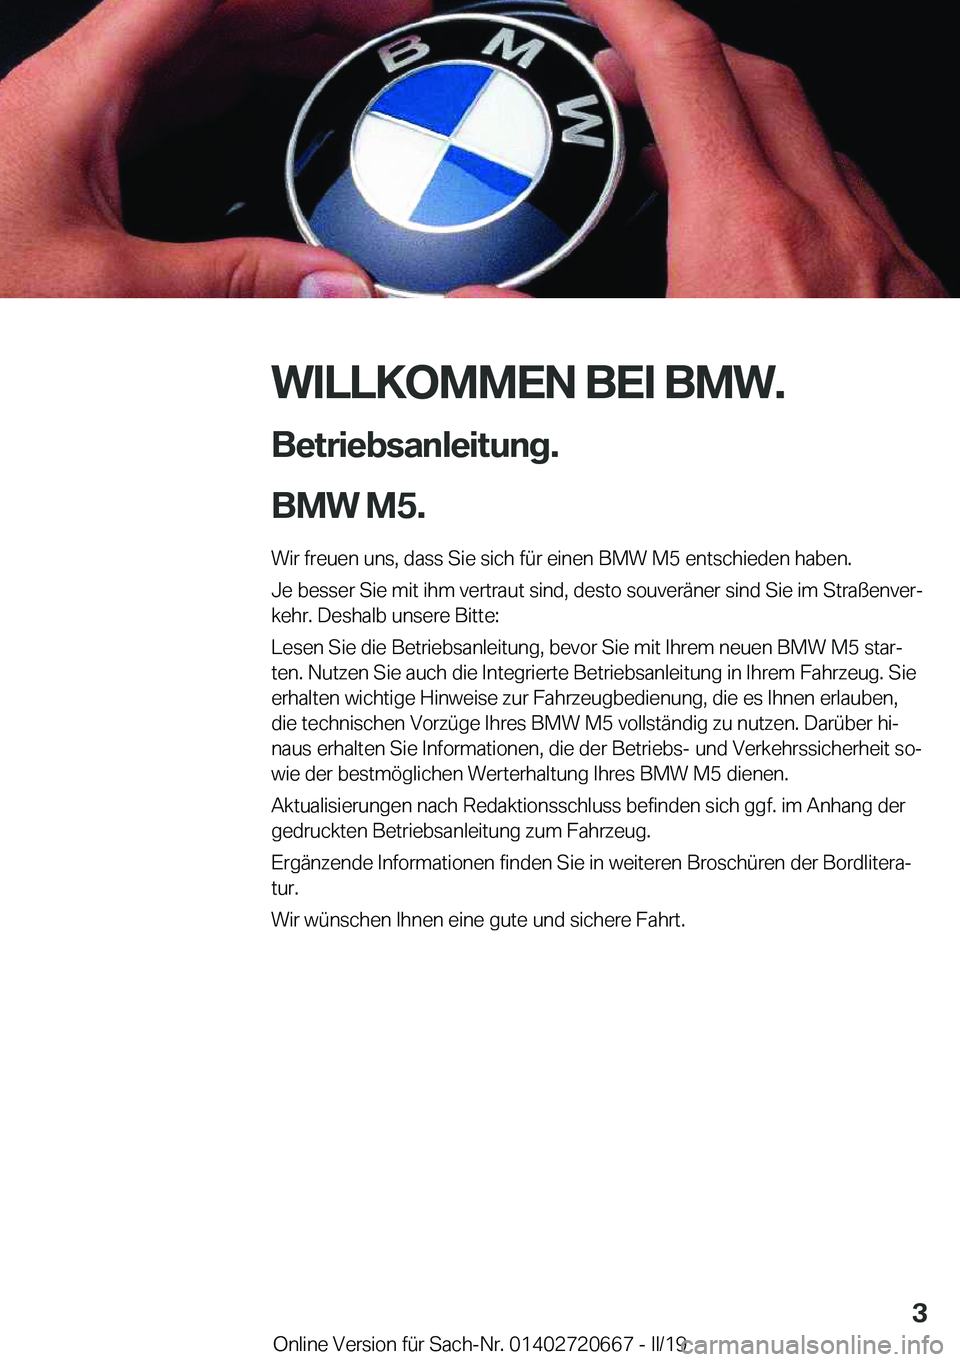 BMW M5 2019  Betriebsanleitungen (in German) �W�I�L�L�K�O�M�M�E�N��B�E�I��B�M�W�.�B�e�t�r�i�e�b�s�a�n�l�e�i�t�u�n�g�.
�B�M�W��M�5�. �W�i�r��f�r�e�u�e�n��u�n�s�,��d�a�s�s��S�i�e��s�i�c�h��f�